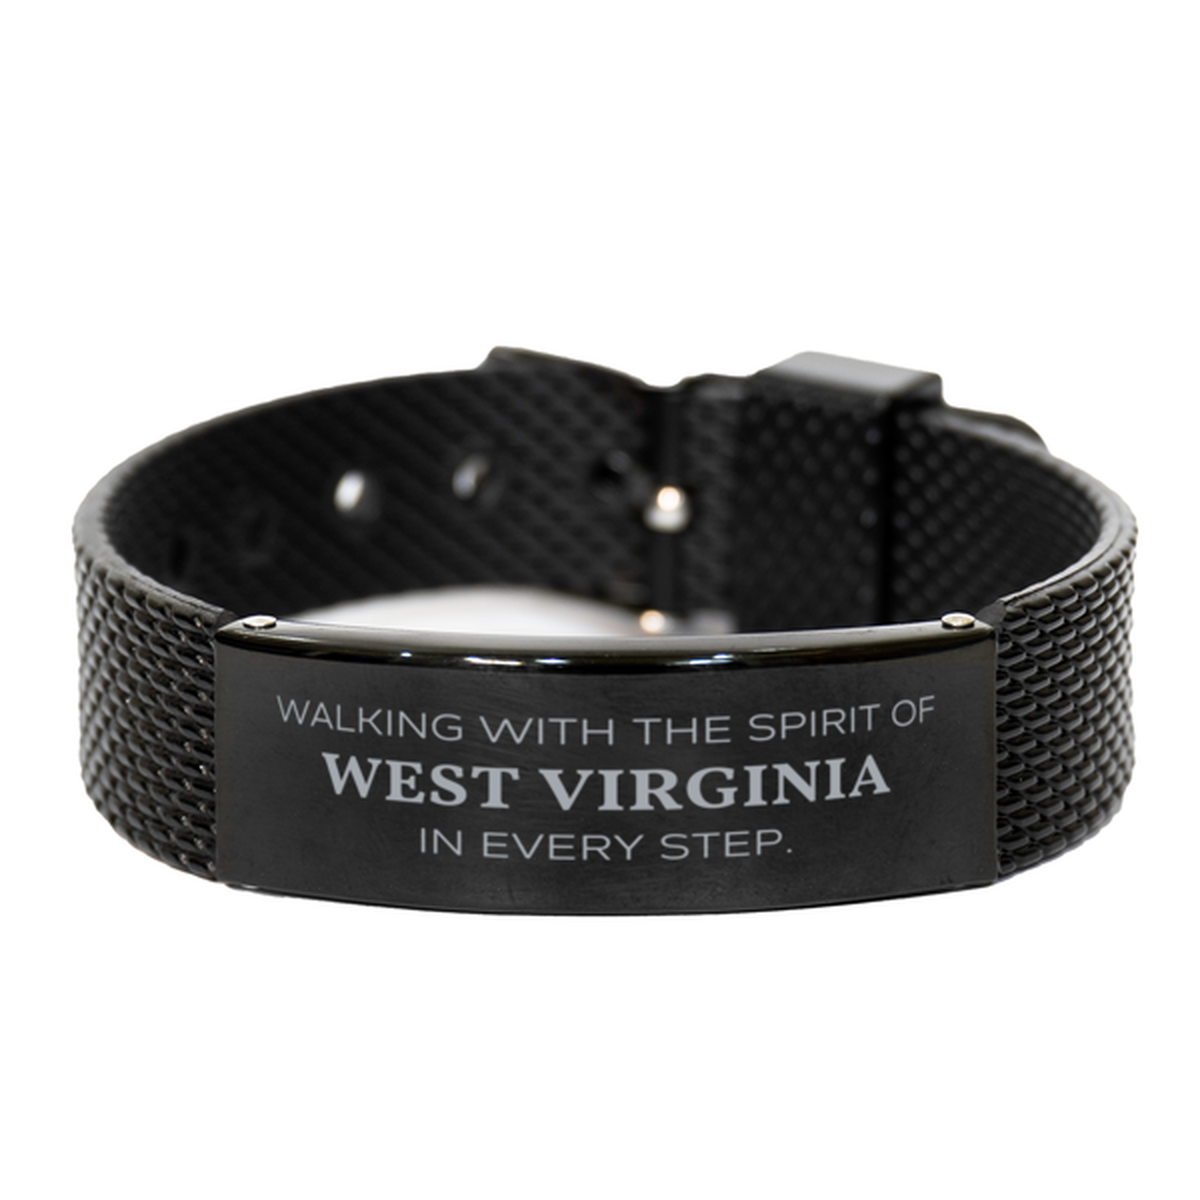 West Virginia Gifts, Walking with the spirit, Love West Virginia Birthday Christmas Black Shark Mesh Bracelet For West Virginia People, Men, Women, Friends